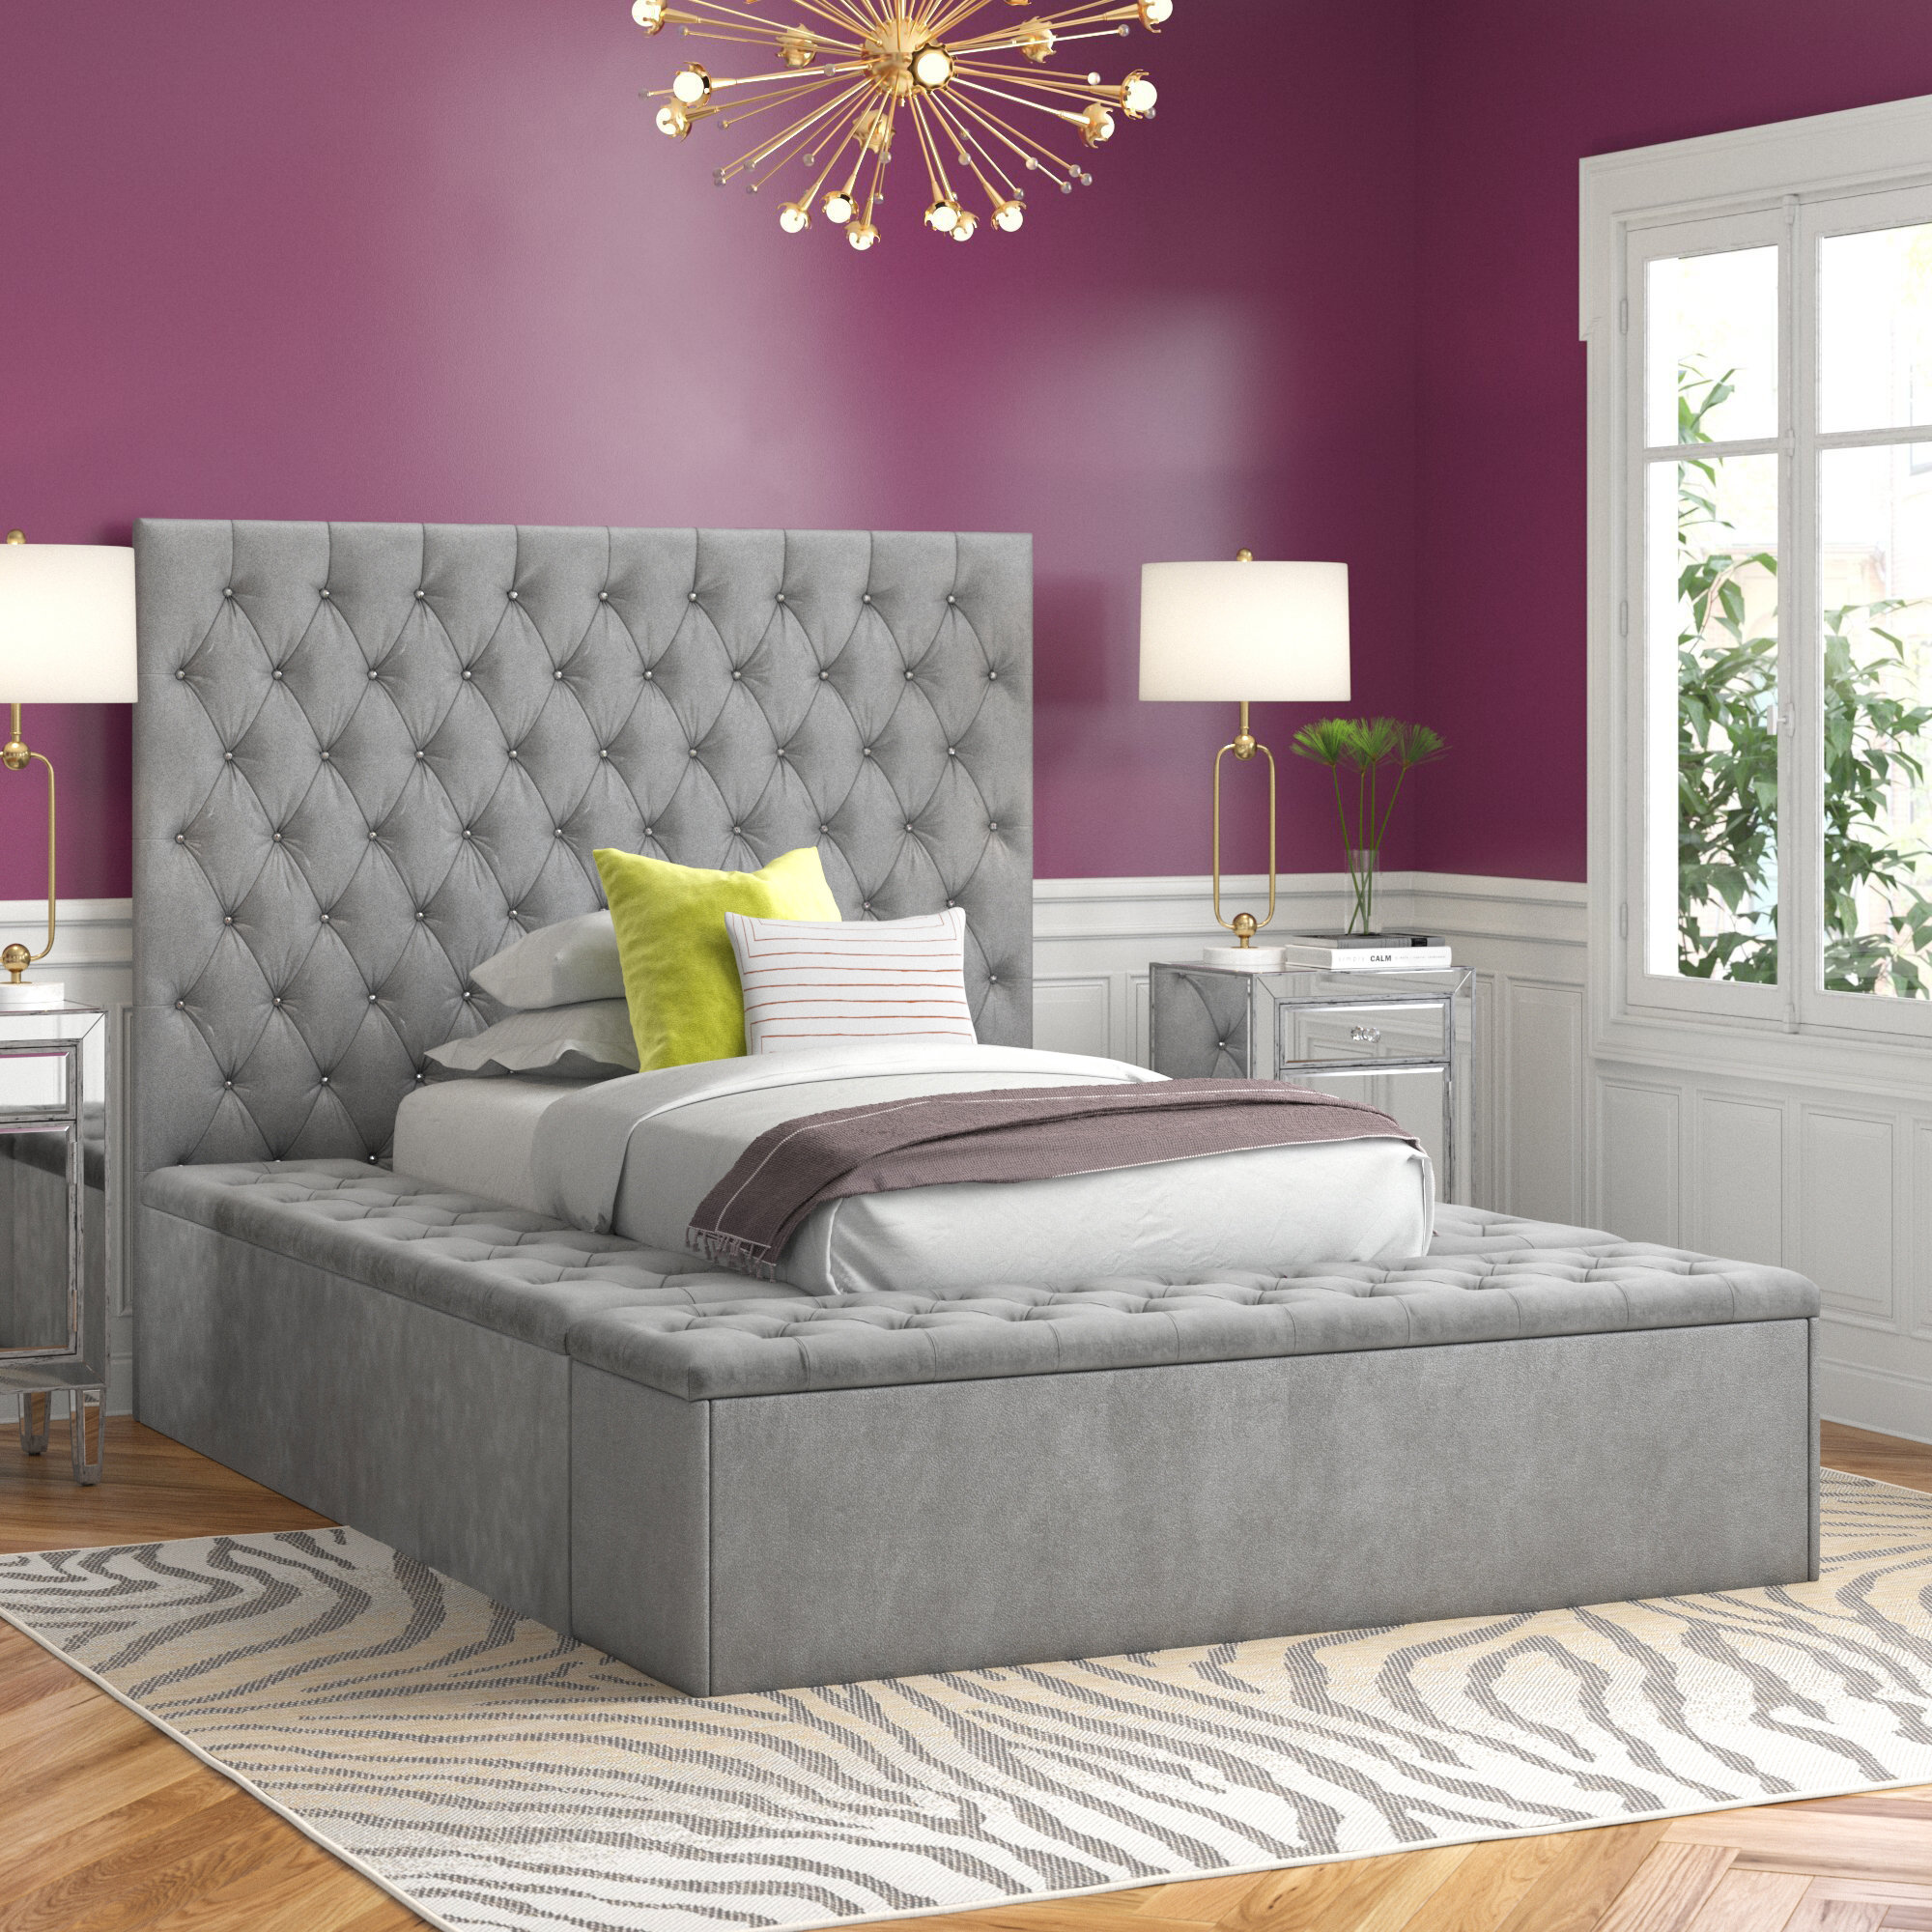 Brij Upholstered Low Profile Storage Platform Bed Red Barrel Studio Color: Light Gray, Mattress Size: Queen